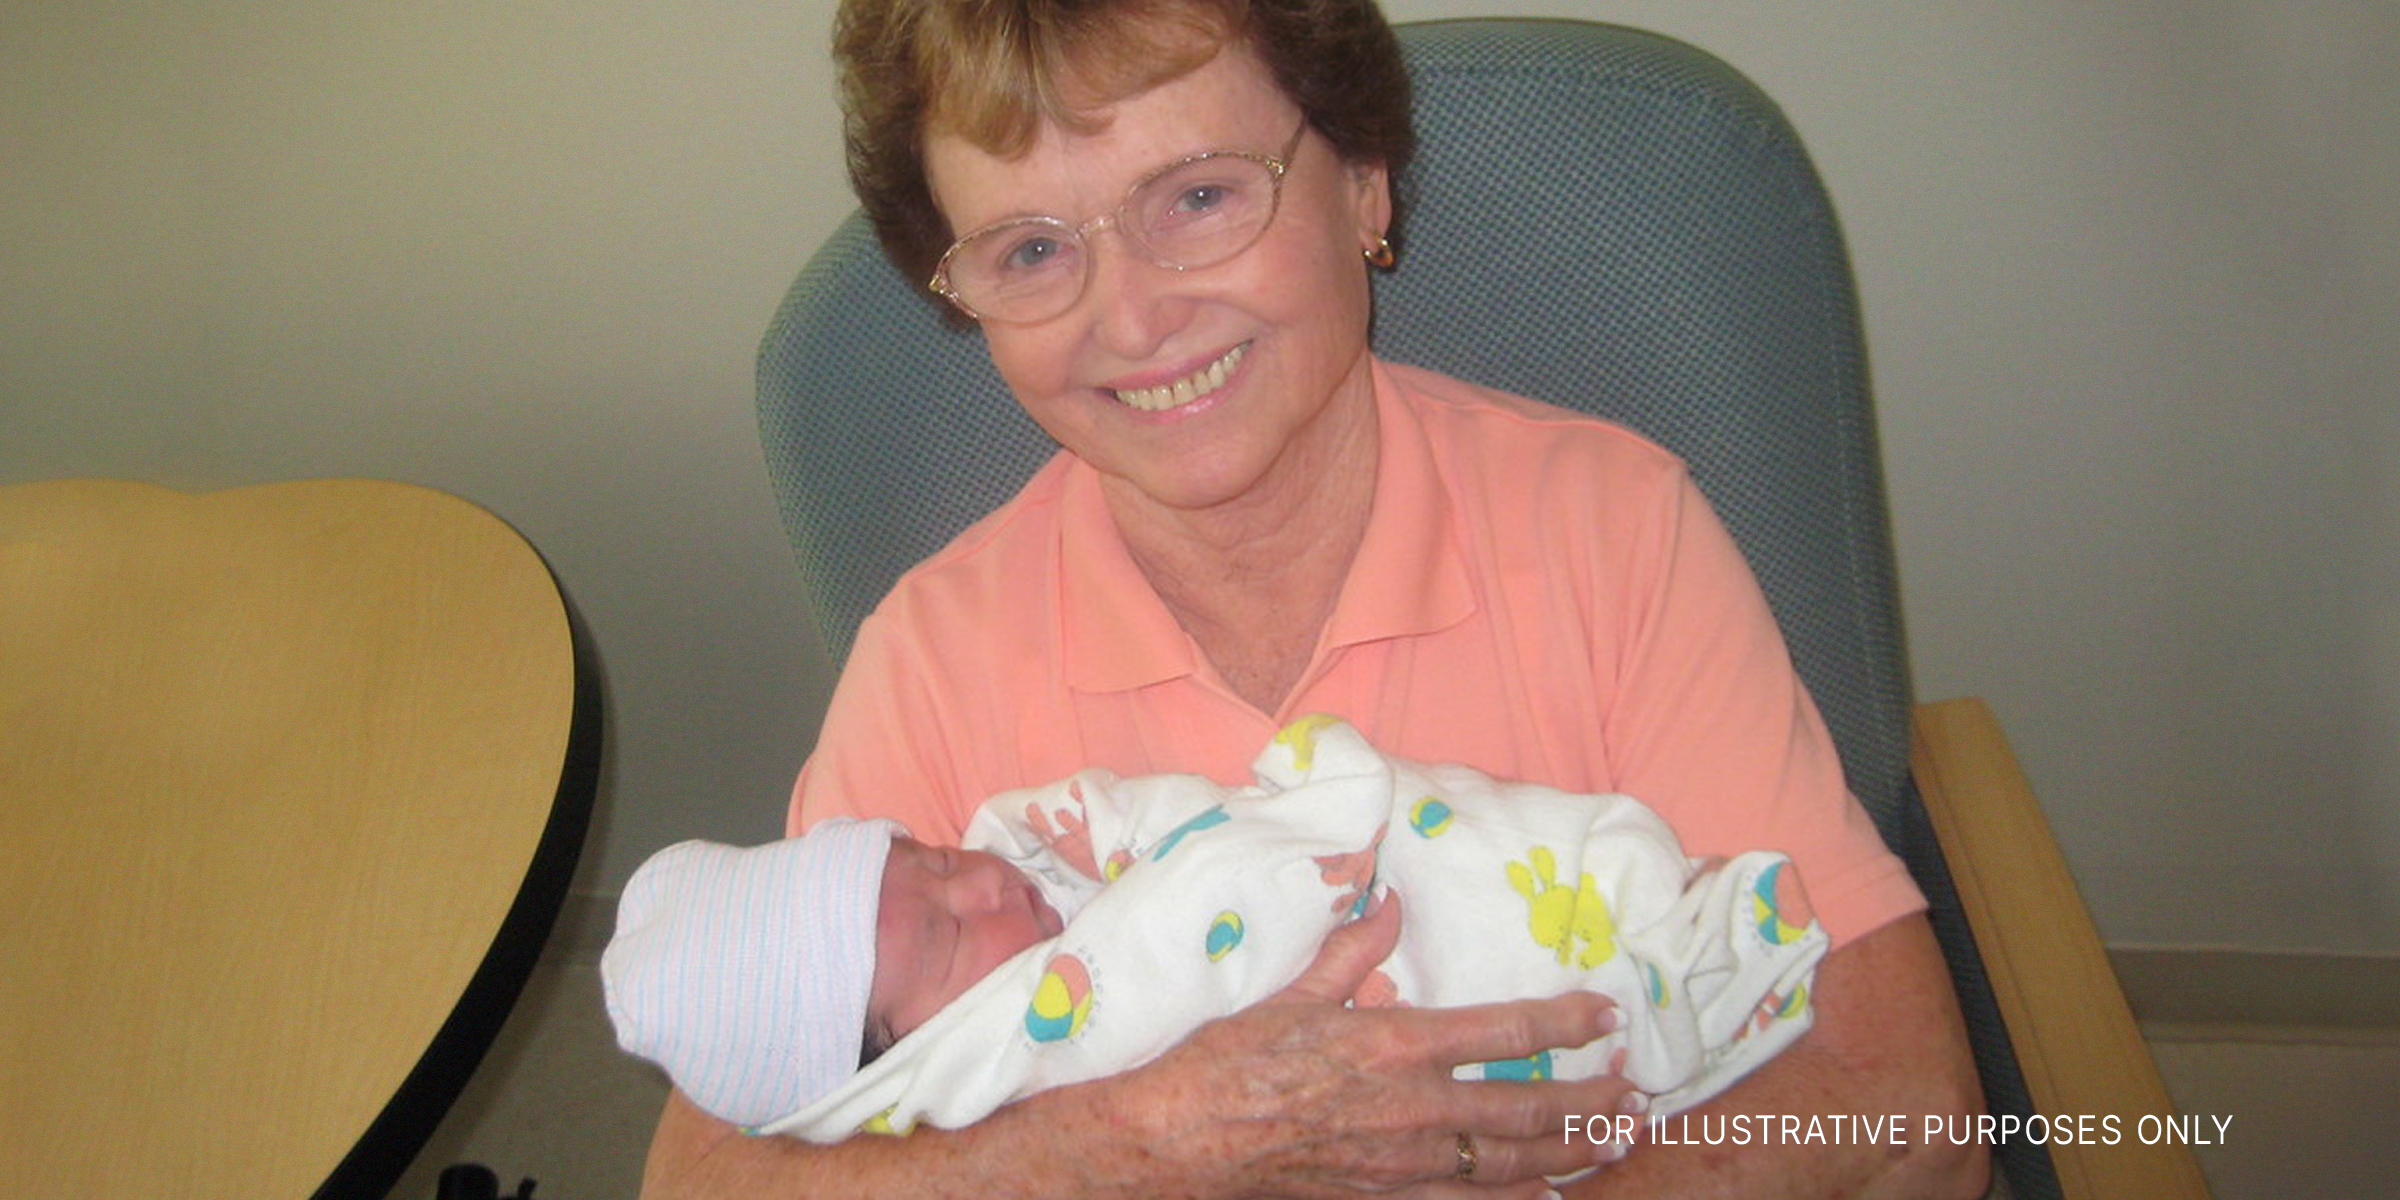 An elderly woman holding a newborn | Source: flickr.com/ryarwood/CC BY-SA 2.0